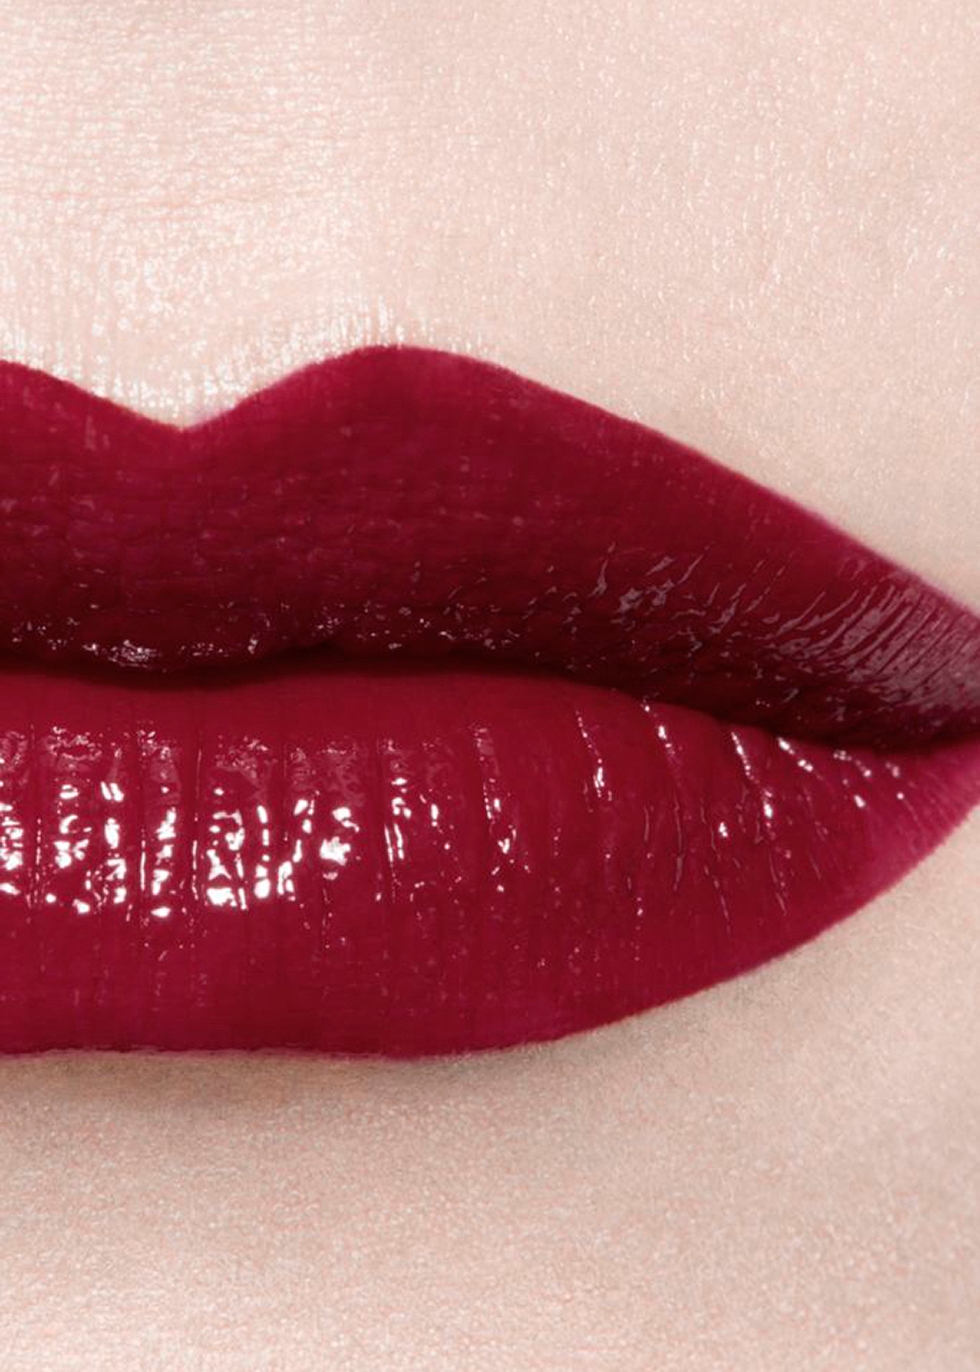 LE ROUGE DUO ULTRA TENUE Ultrawear liquid lip colour 43  Sensual rose   CHANEL